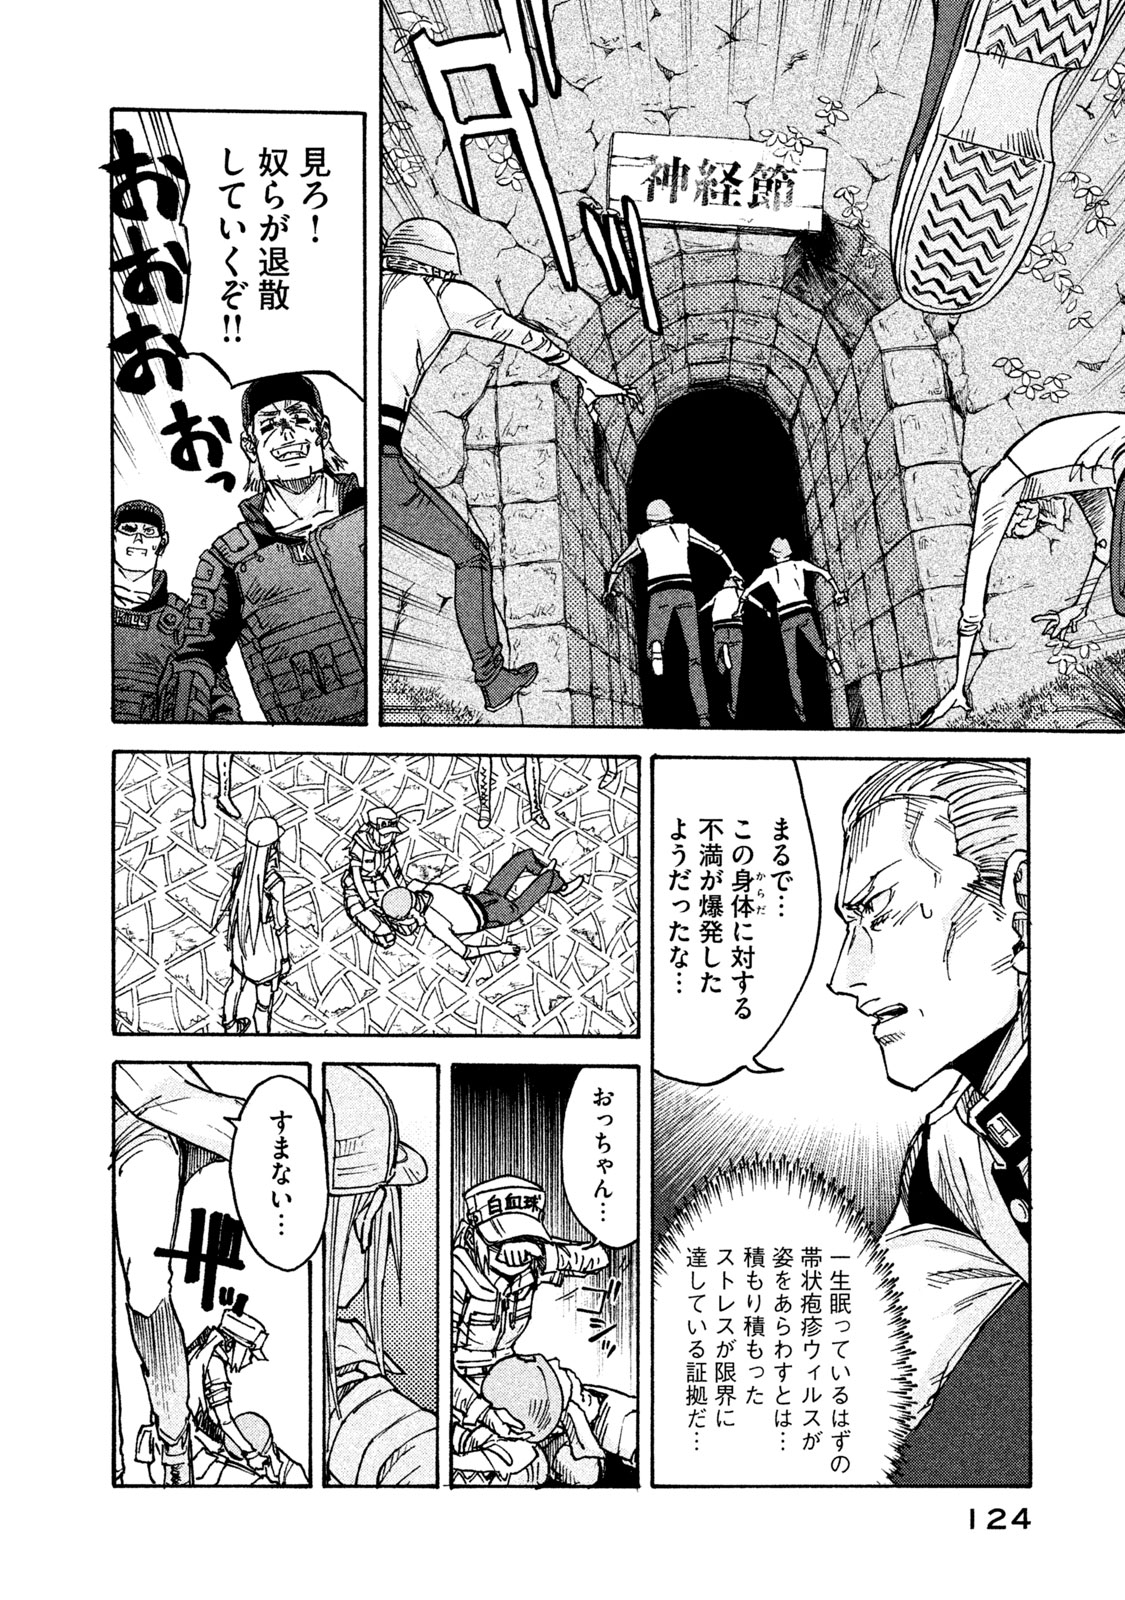 Hataraku Saibou BLACK - Chapter 23 - Page 18